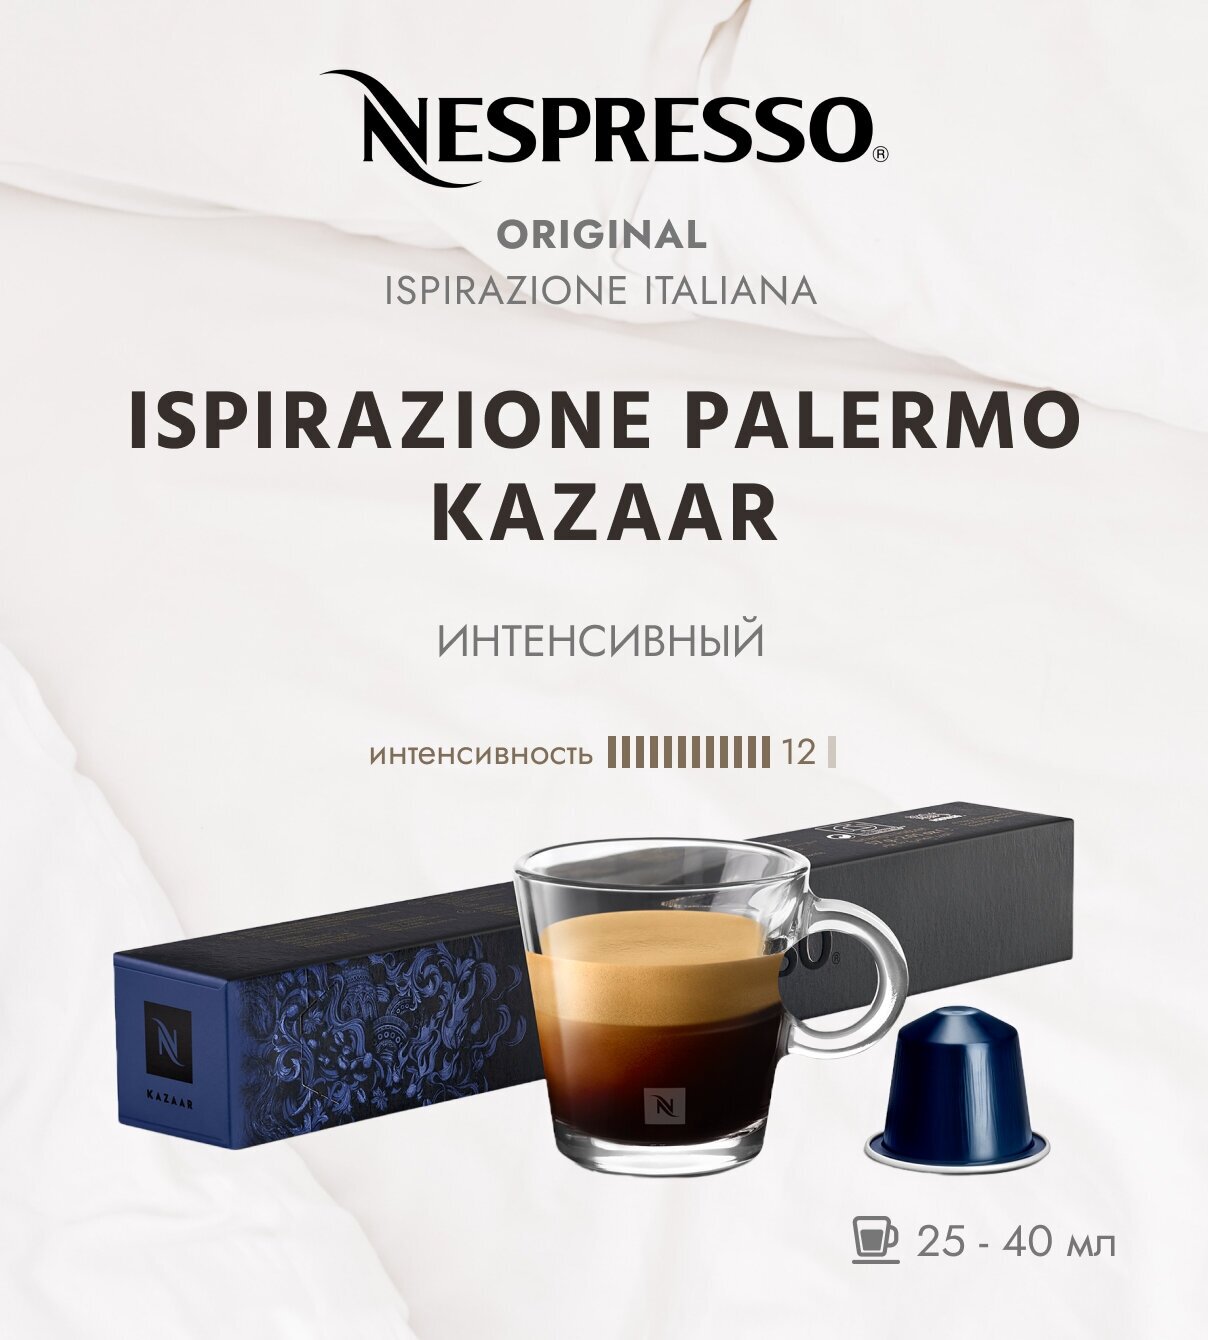 Кофе в капсулах Nespresso Ispirazione Palermo Kazaar 25-40мл. 12/13 набор капсул Неспрессо Original 10 шт